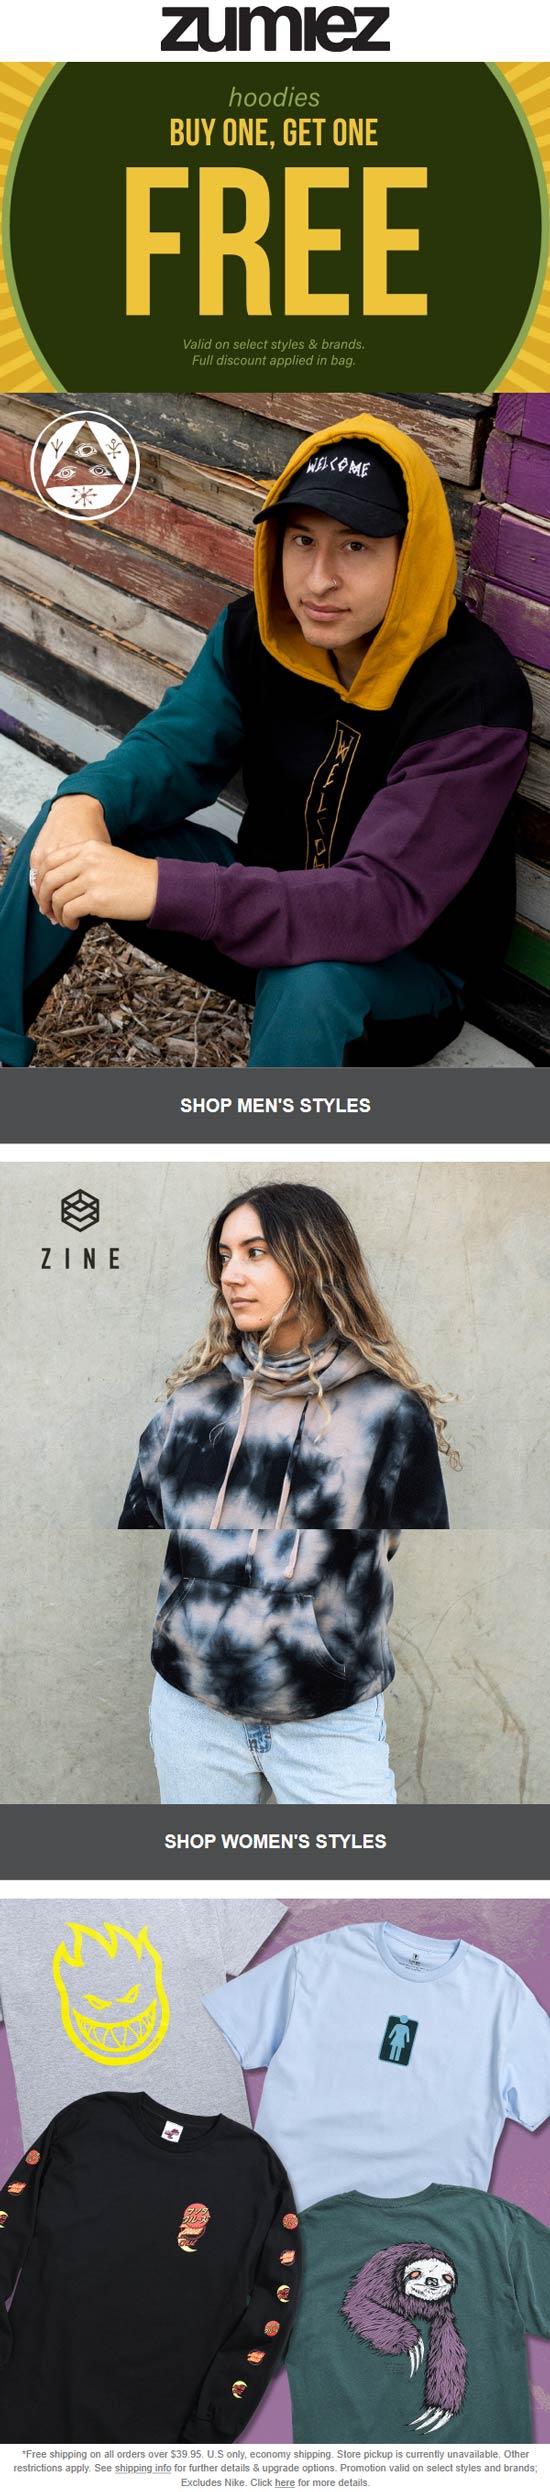 Zumiez stores Coupon  Second hoodie free at Zumiez #zumiez 